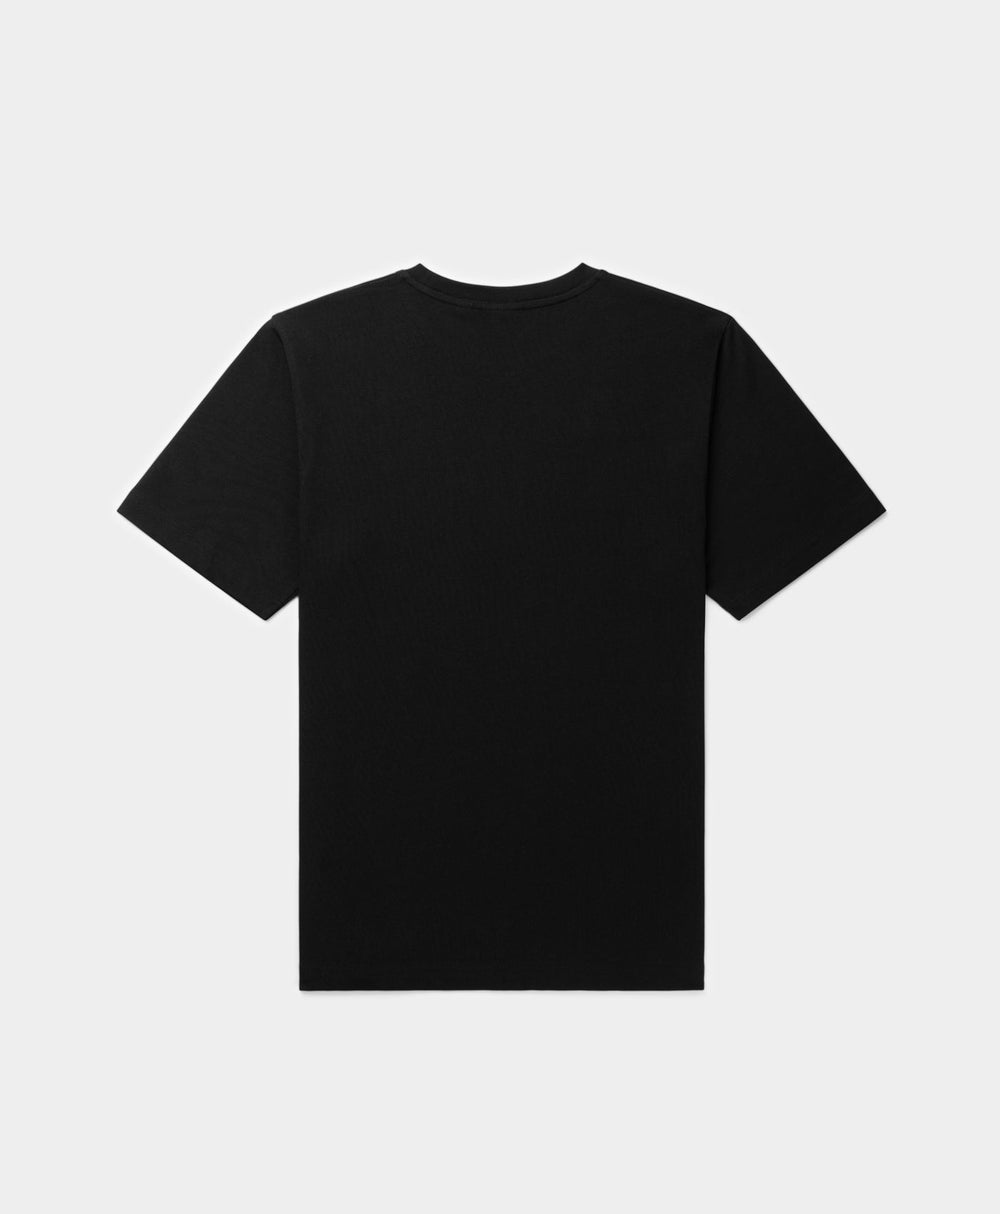 DP - Black Circle T-Shirt - Packshot - Rear